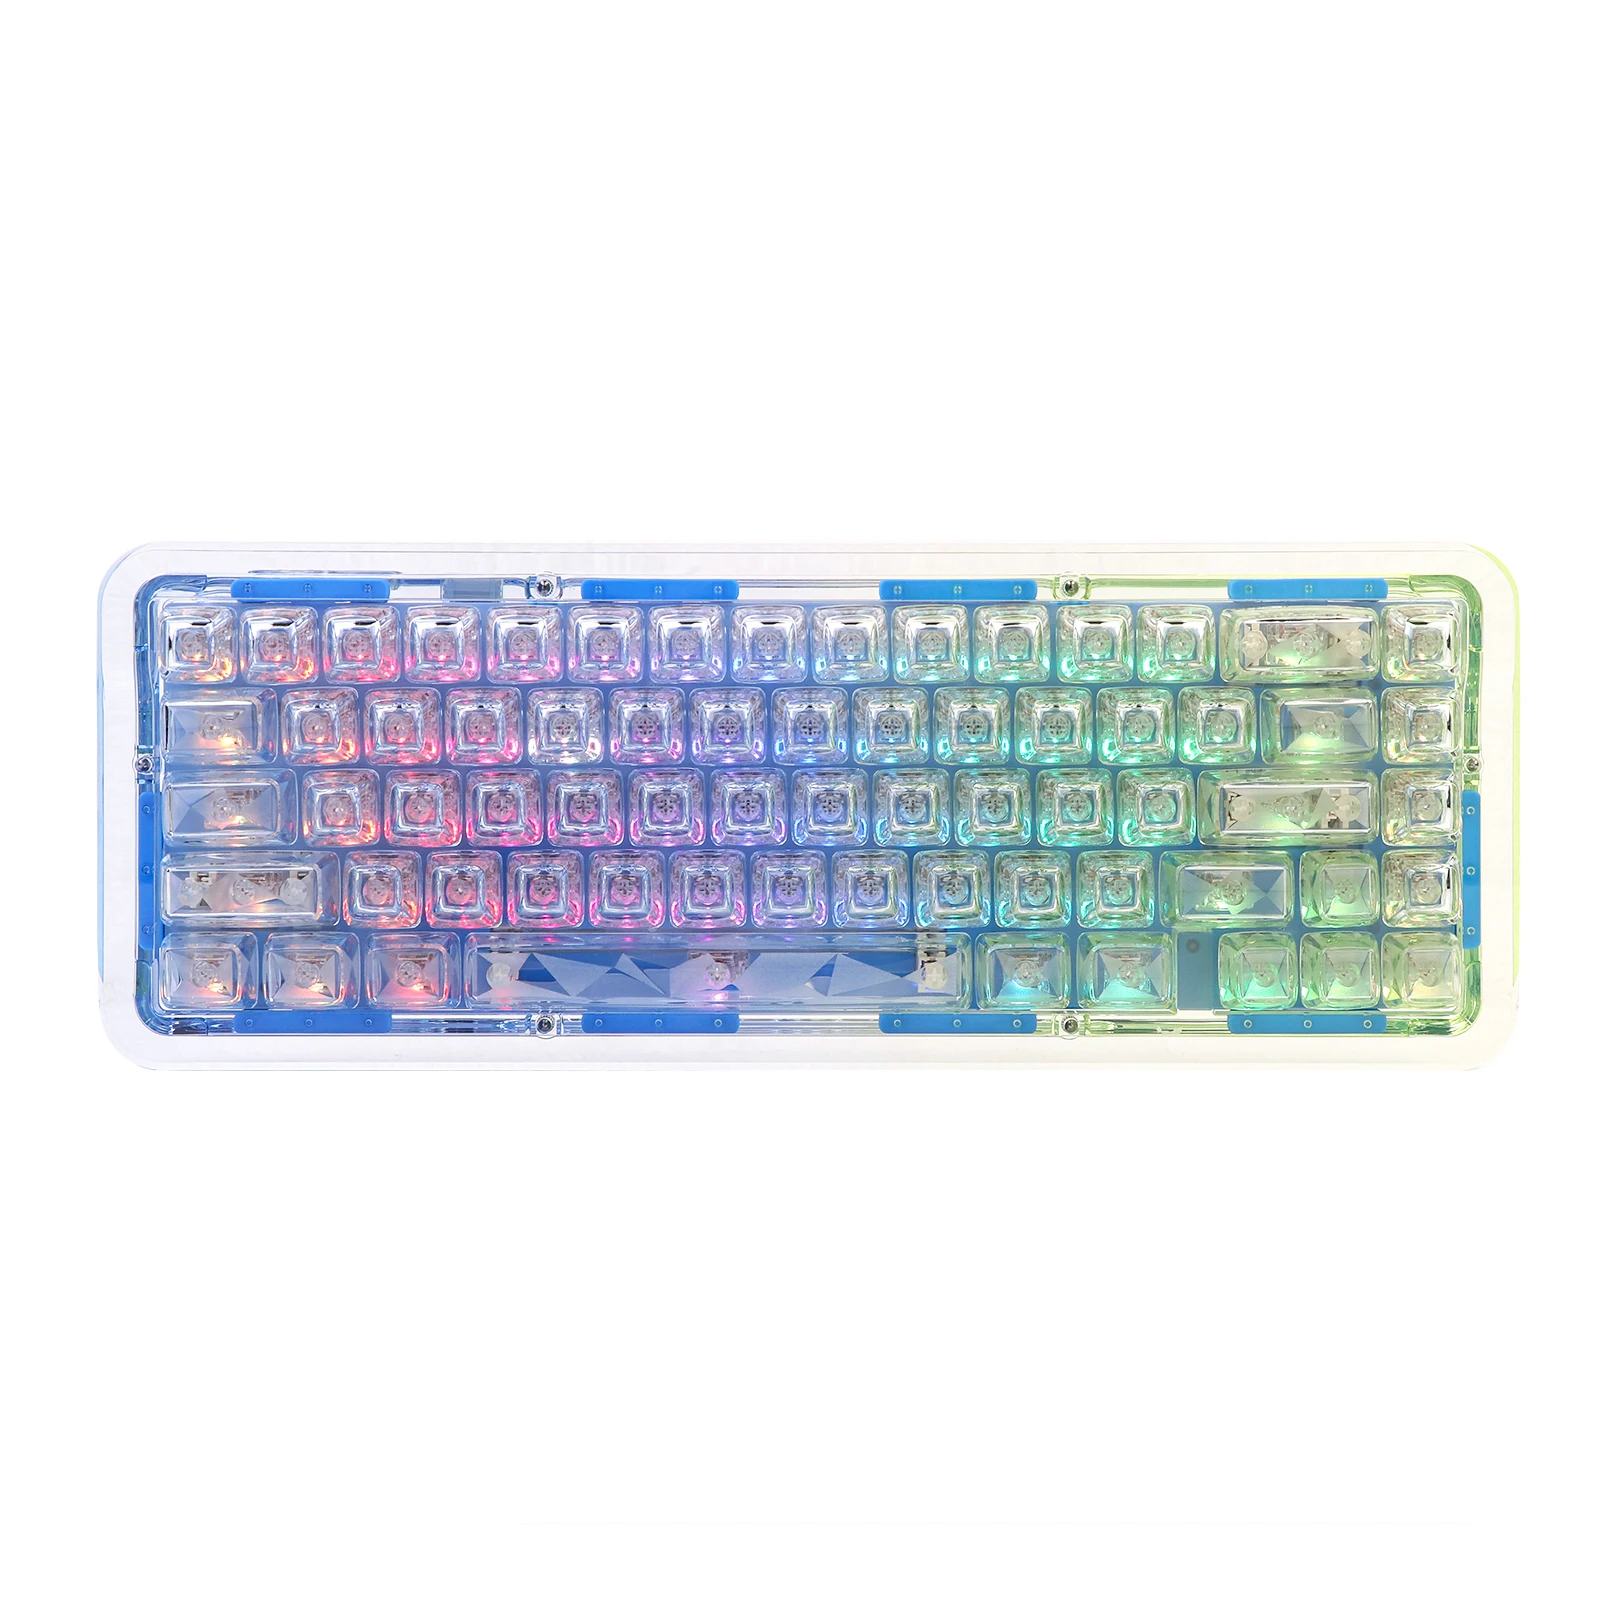 GMK+ Transparent Blue Full Mechanical Keyboard